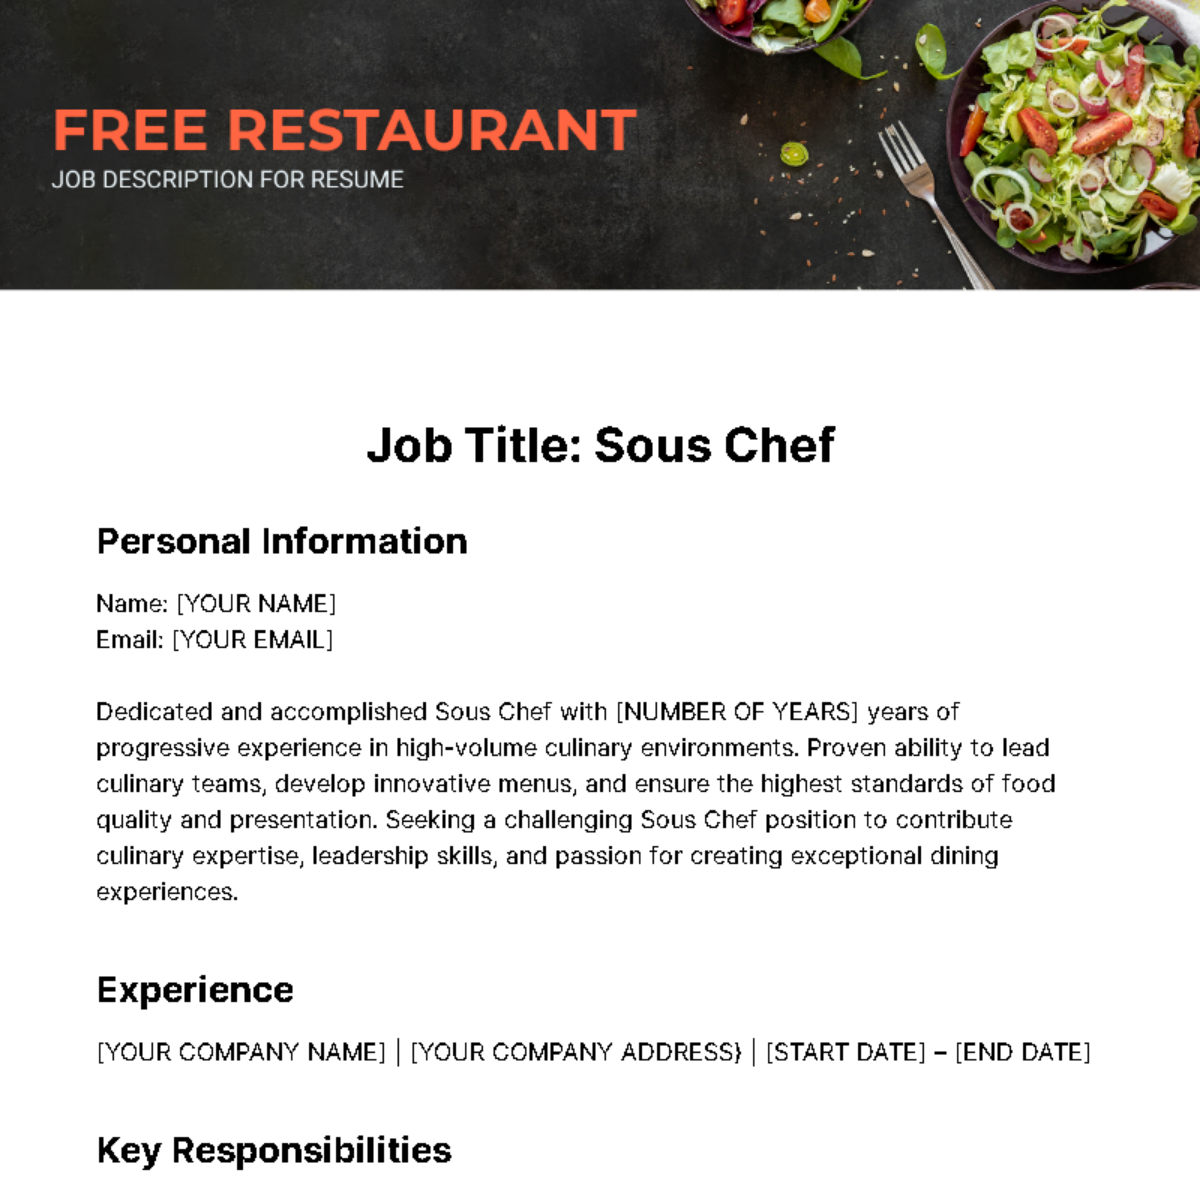 Restaurant Job Description for Resume Template